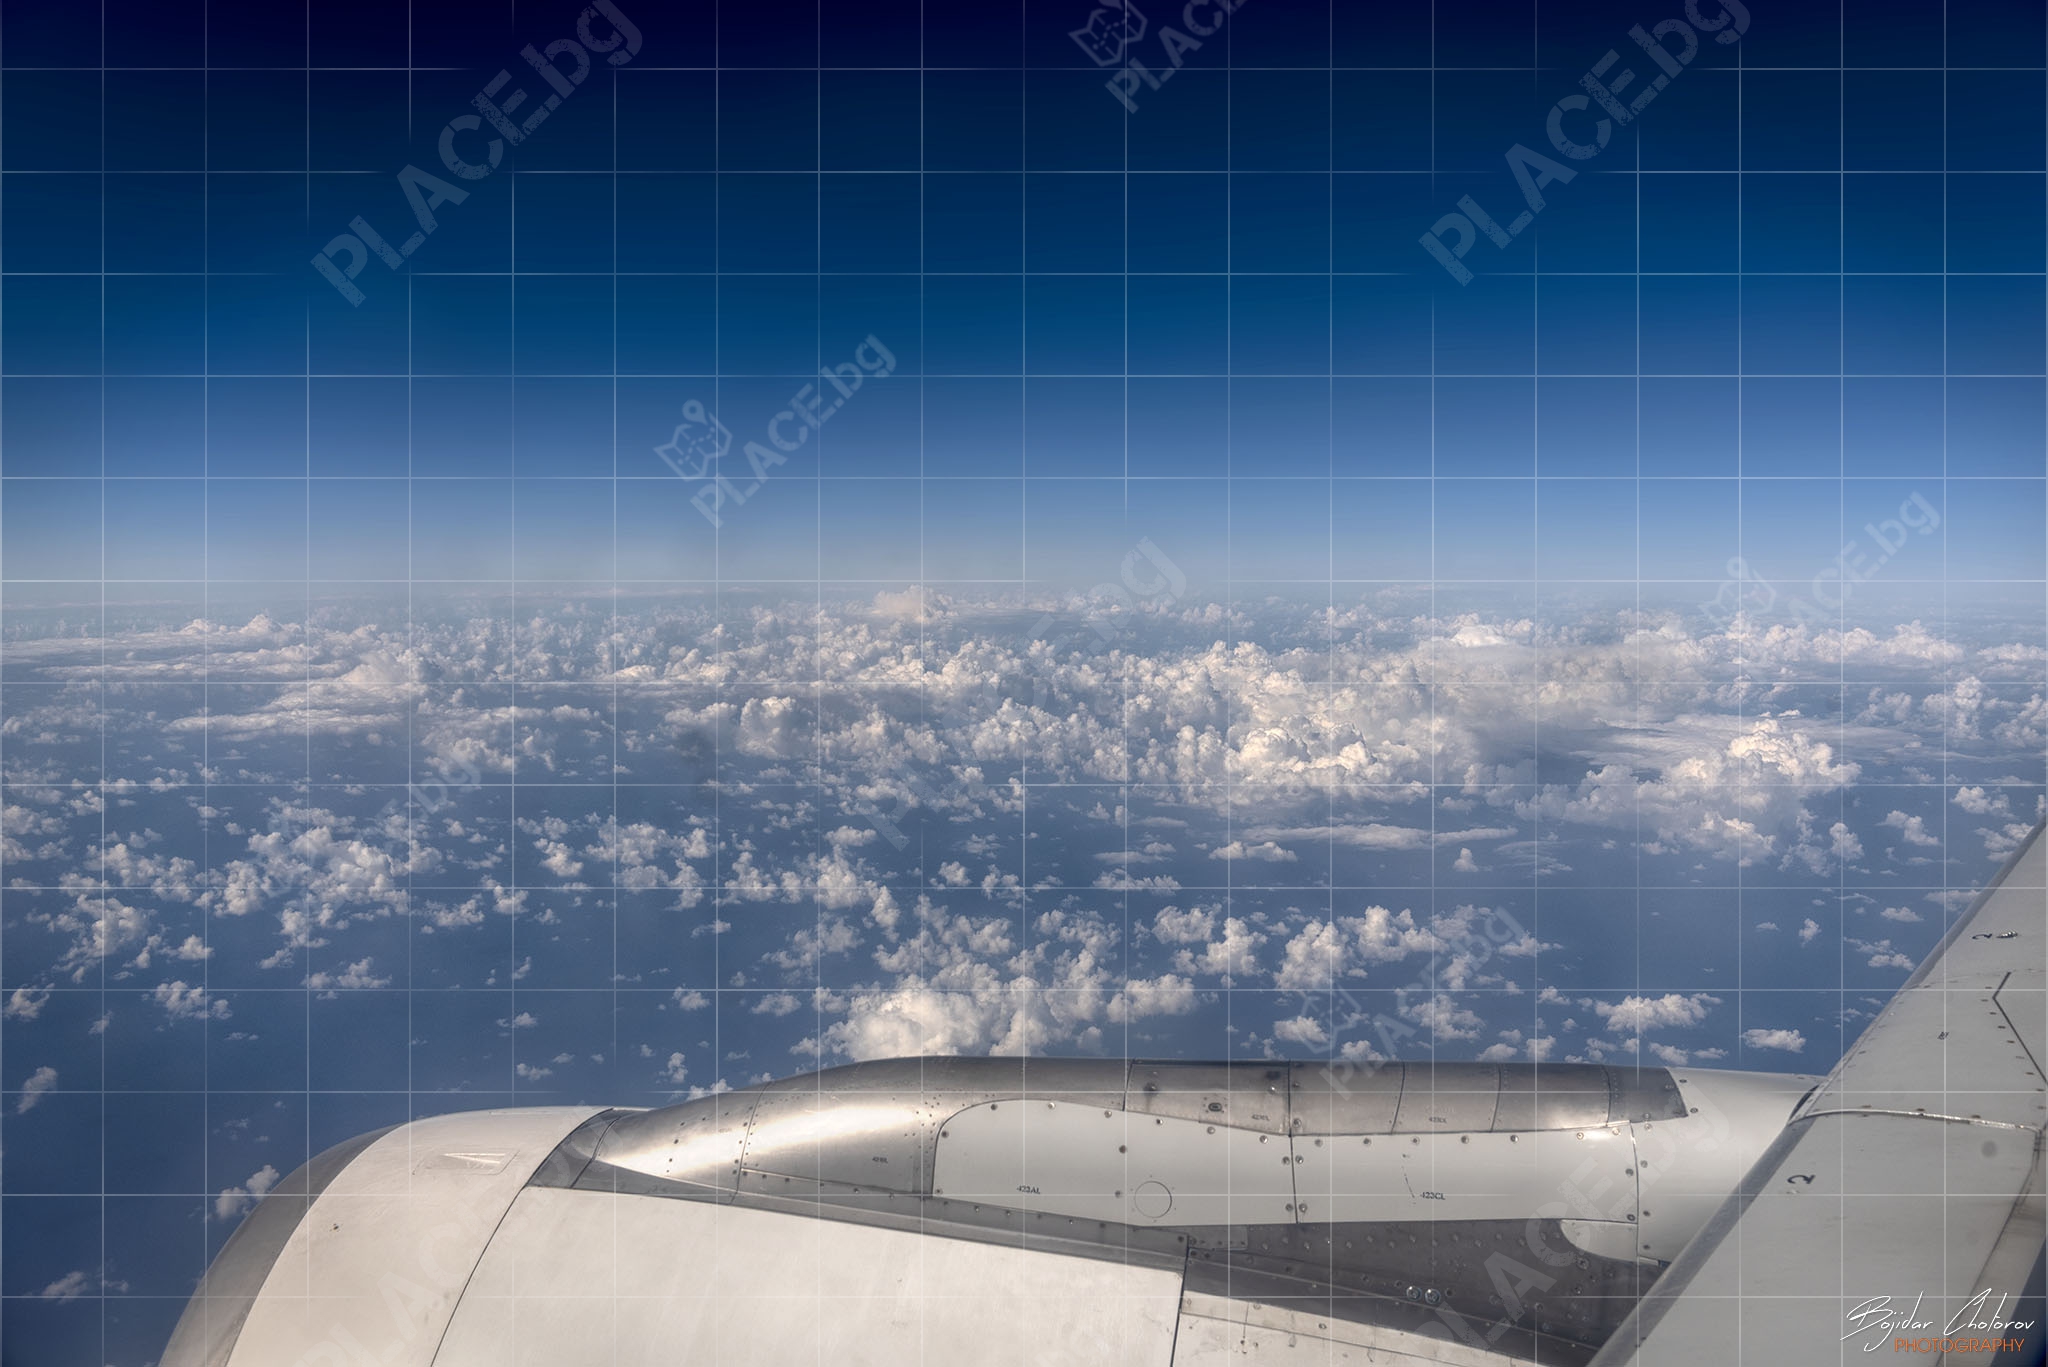 Пейзажът се променя – летим над Средиземно море (BCH_4529)